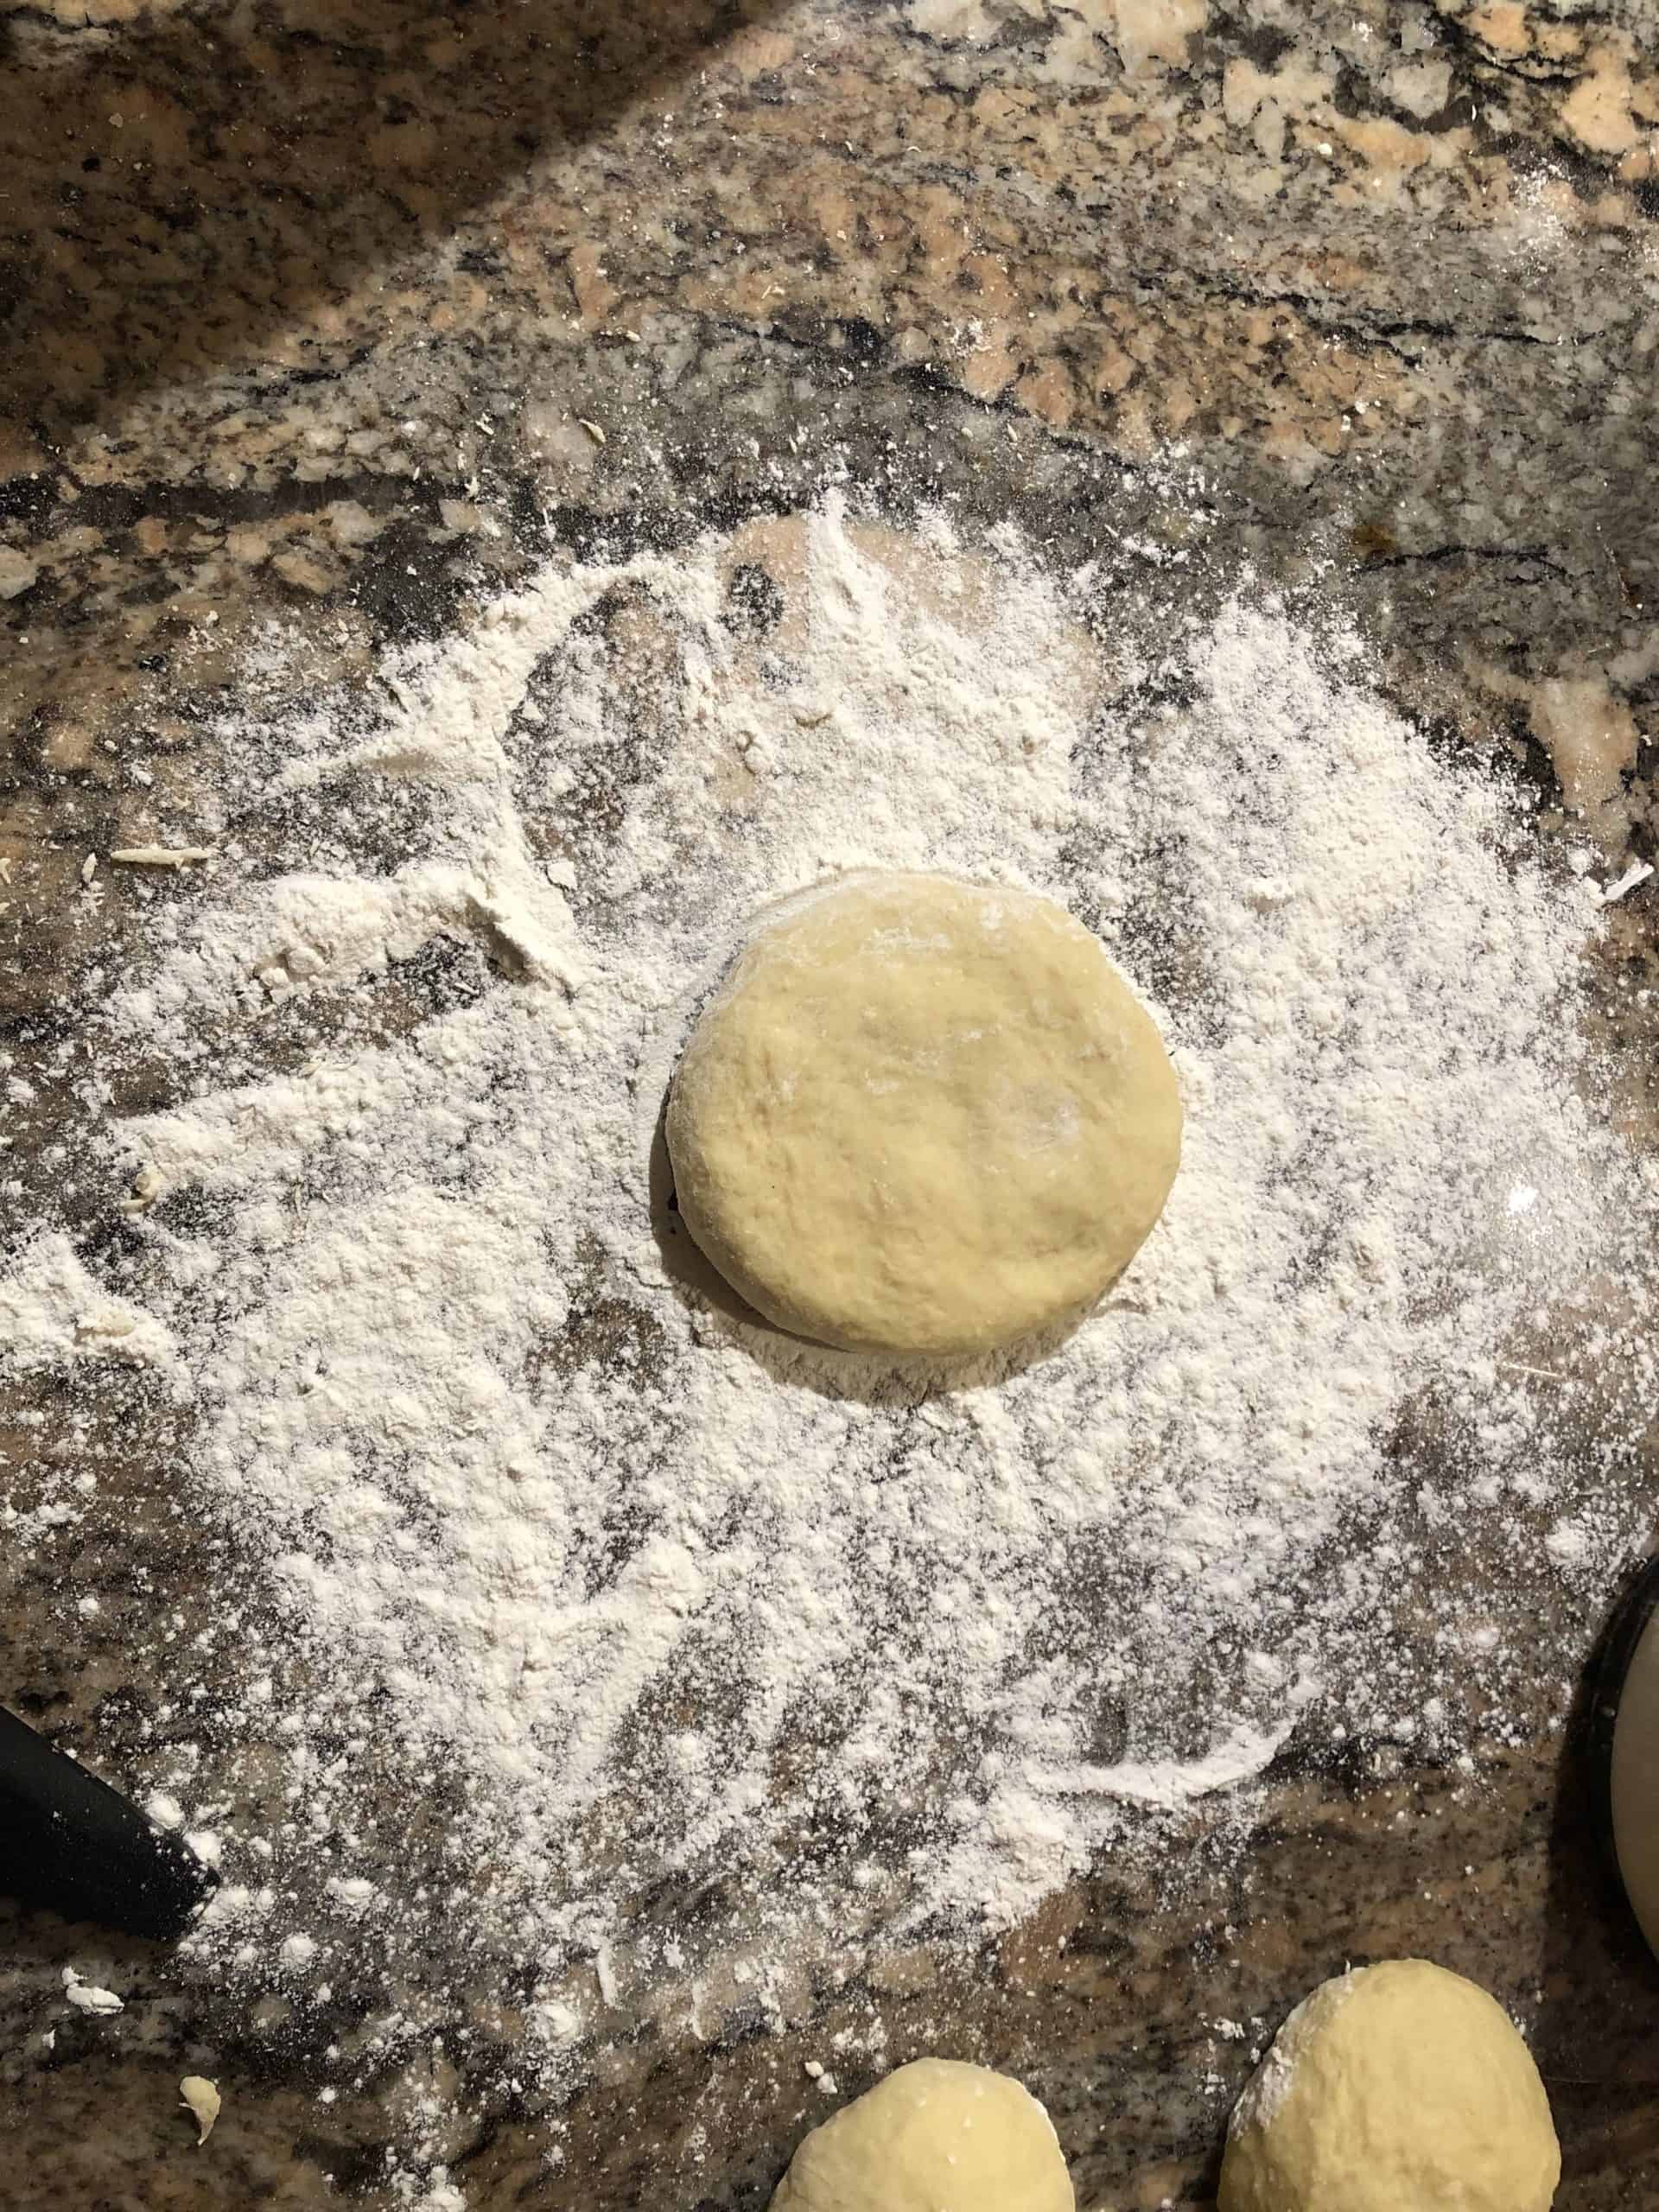 Flattened dough ball